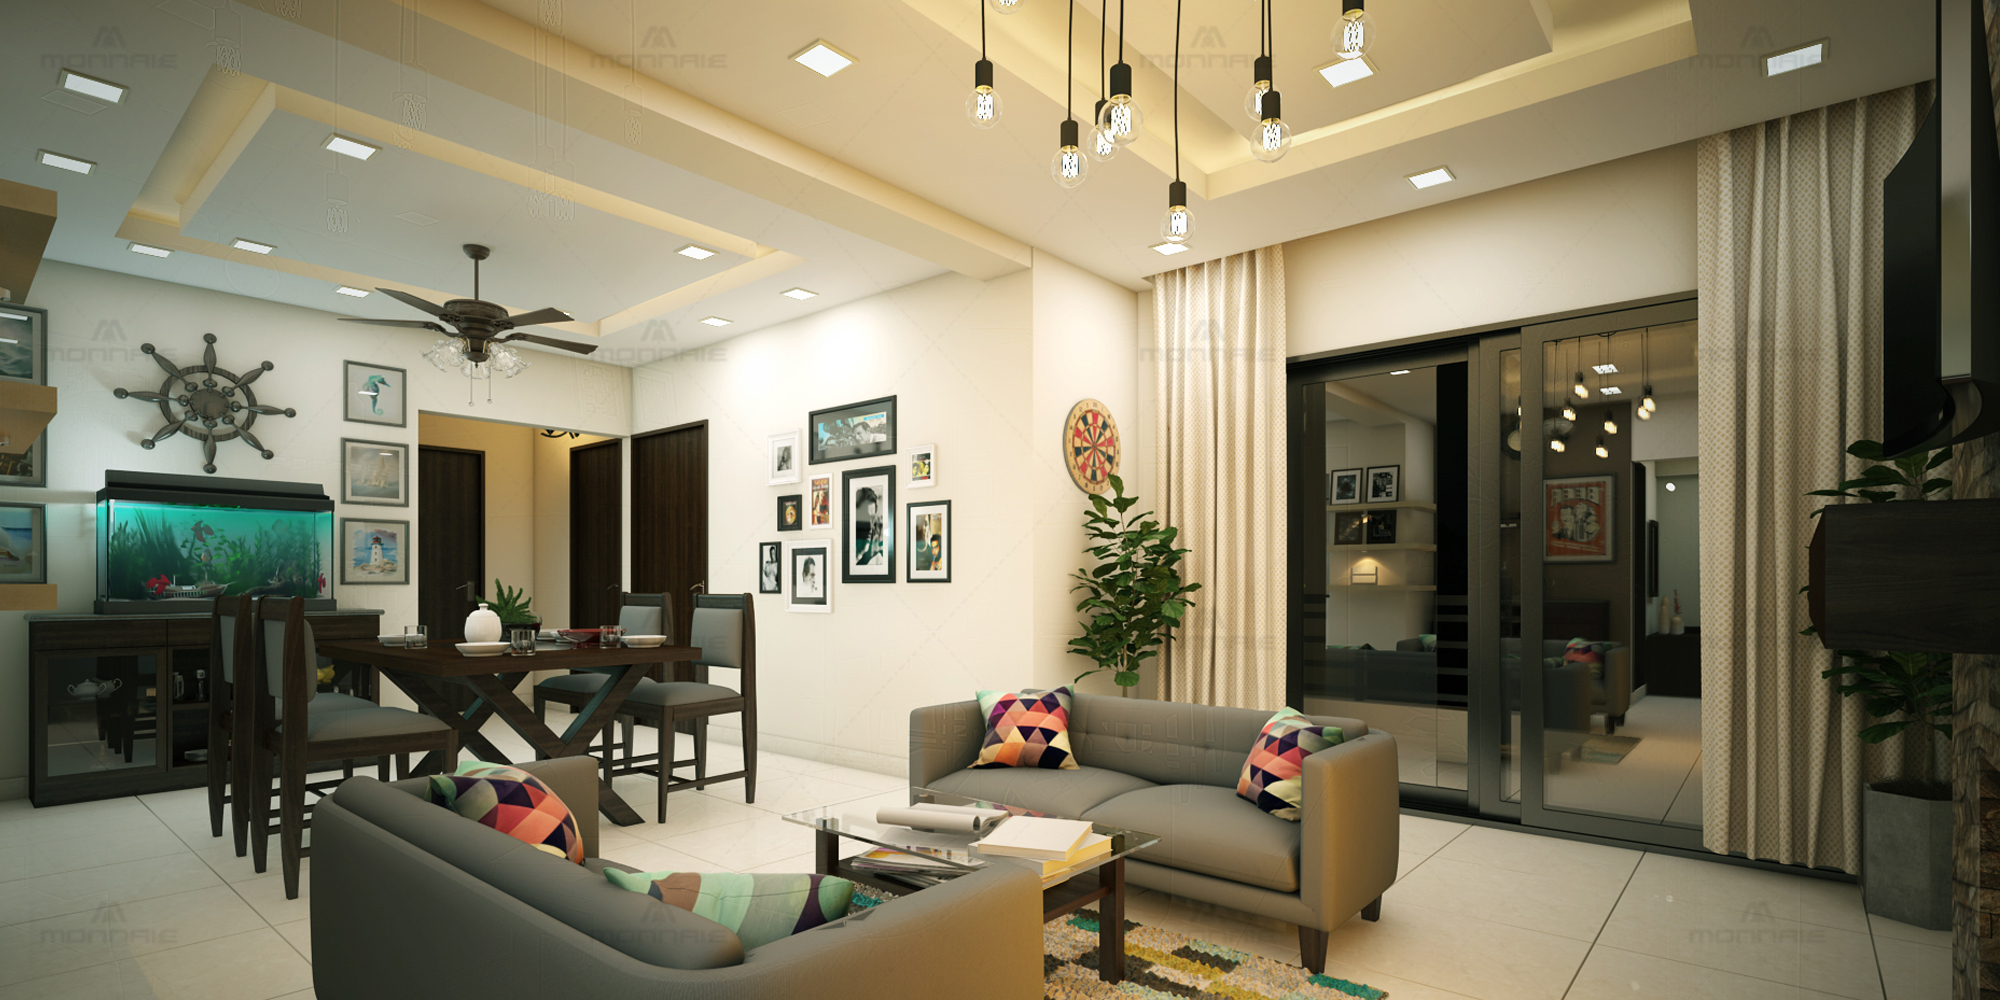 Kerala home interior design ideas How to make a small room look big